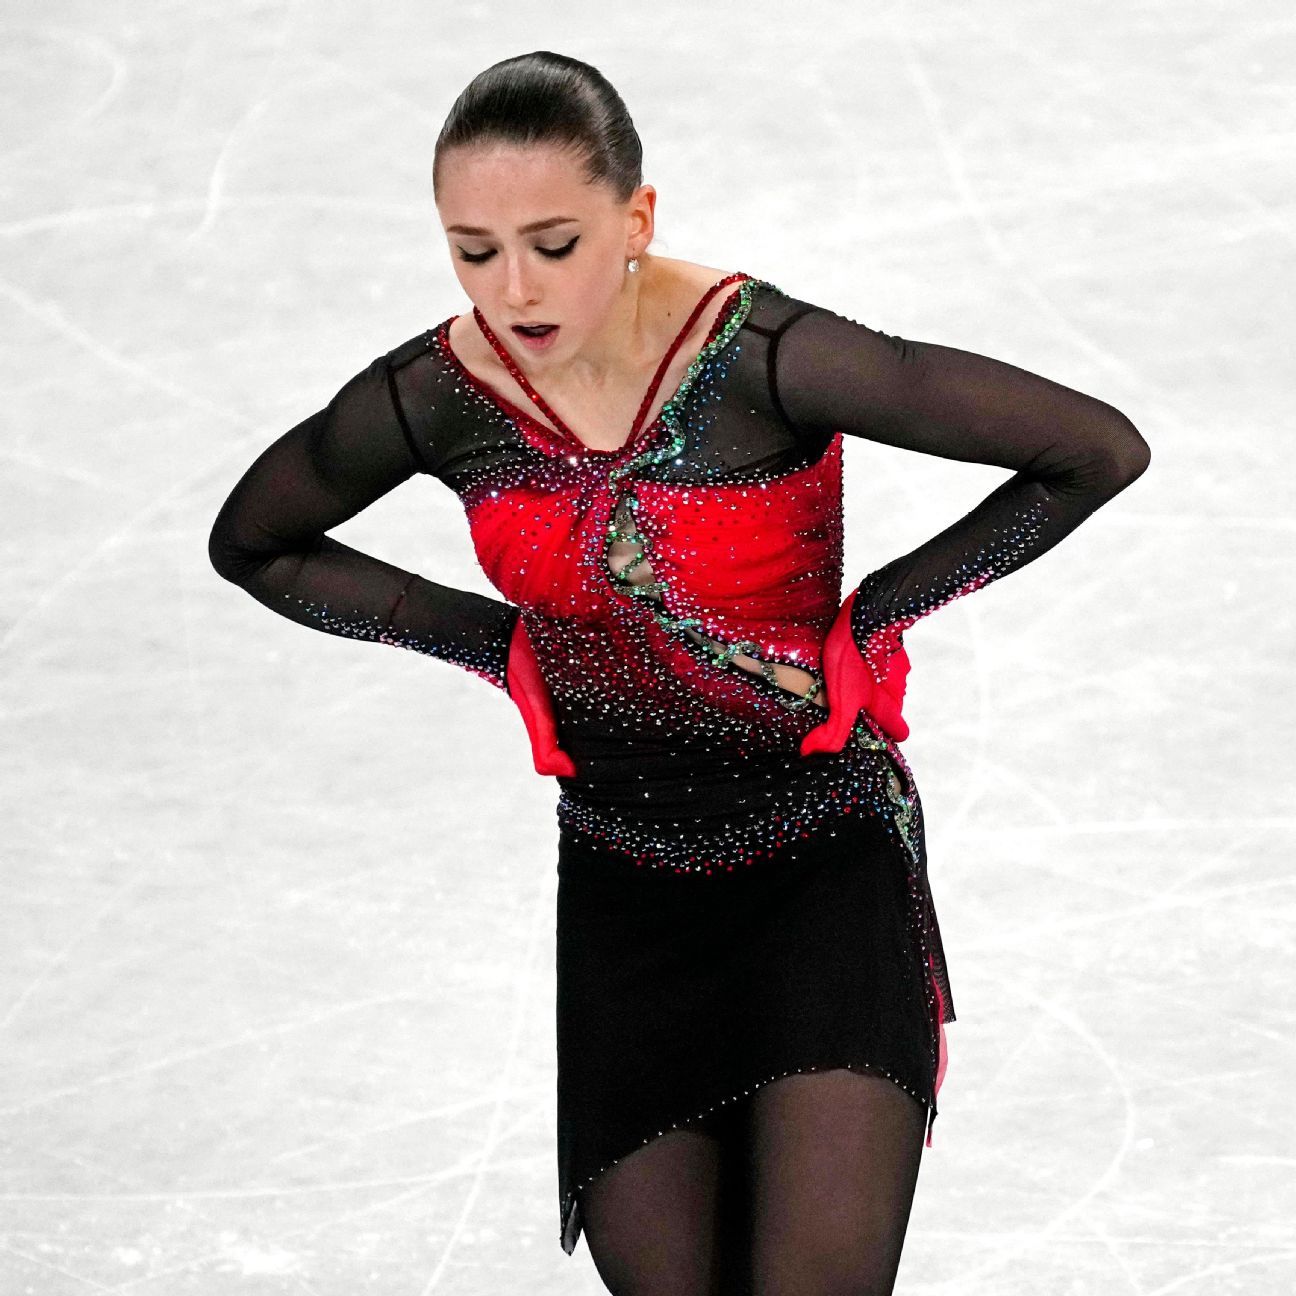 Anna Shcherbakova wins Olympic women's figure skating gold medal as Russian teammate Kamila Valieva falls to fourth place